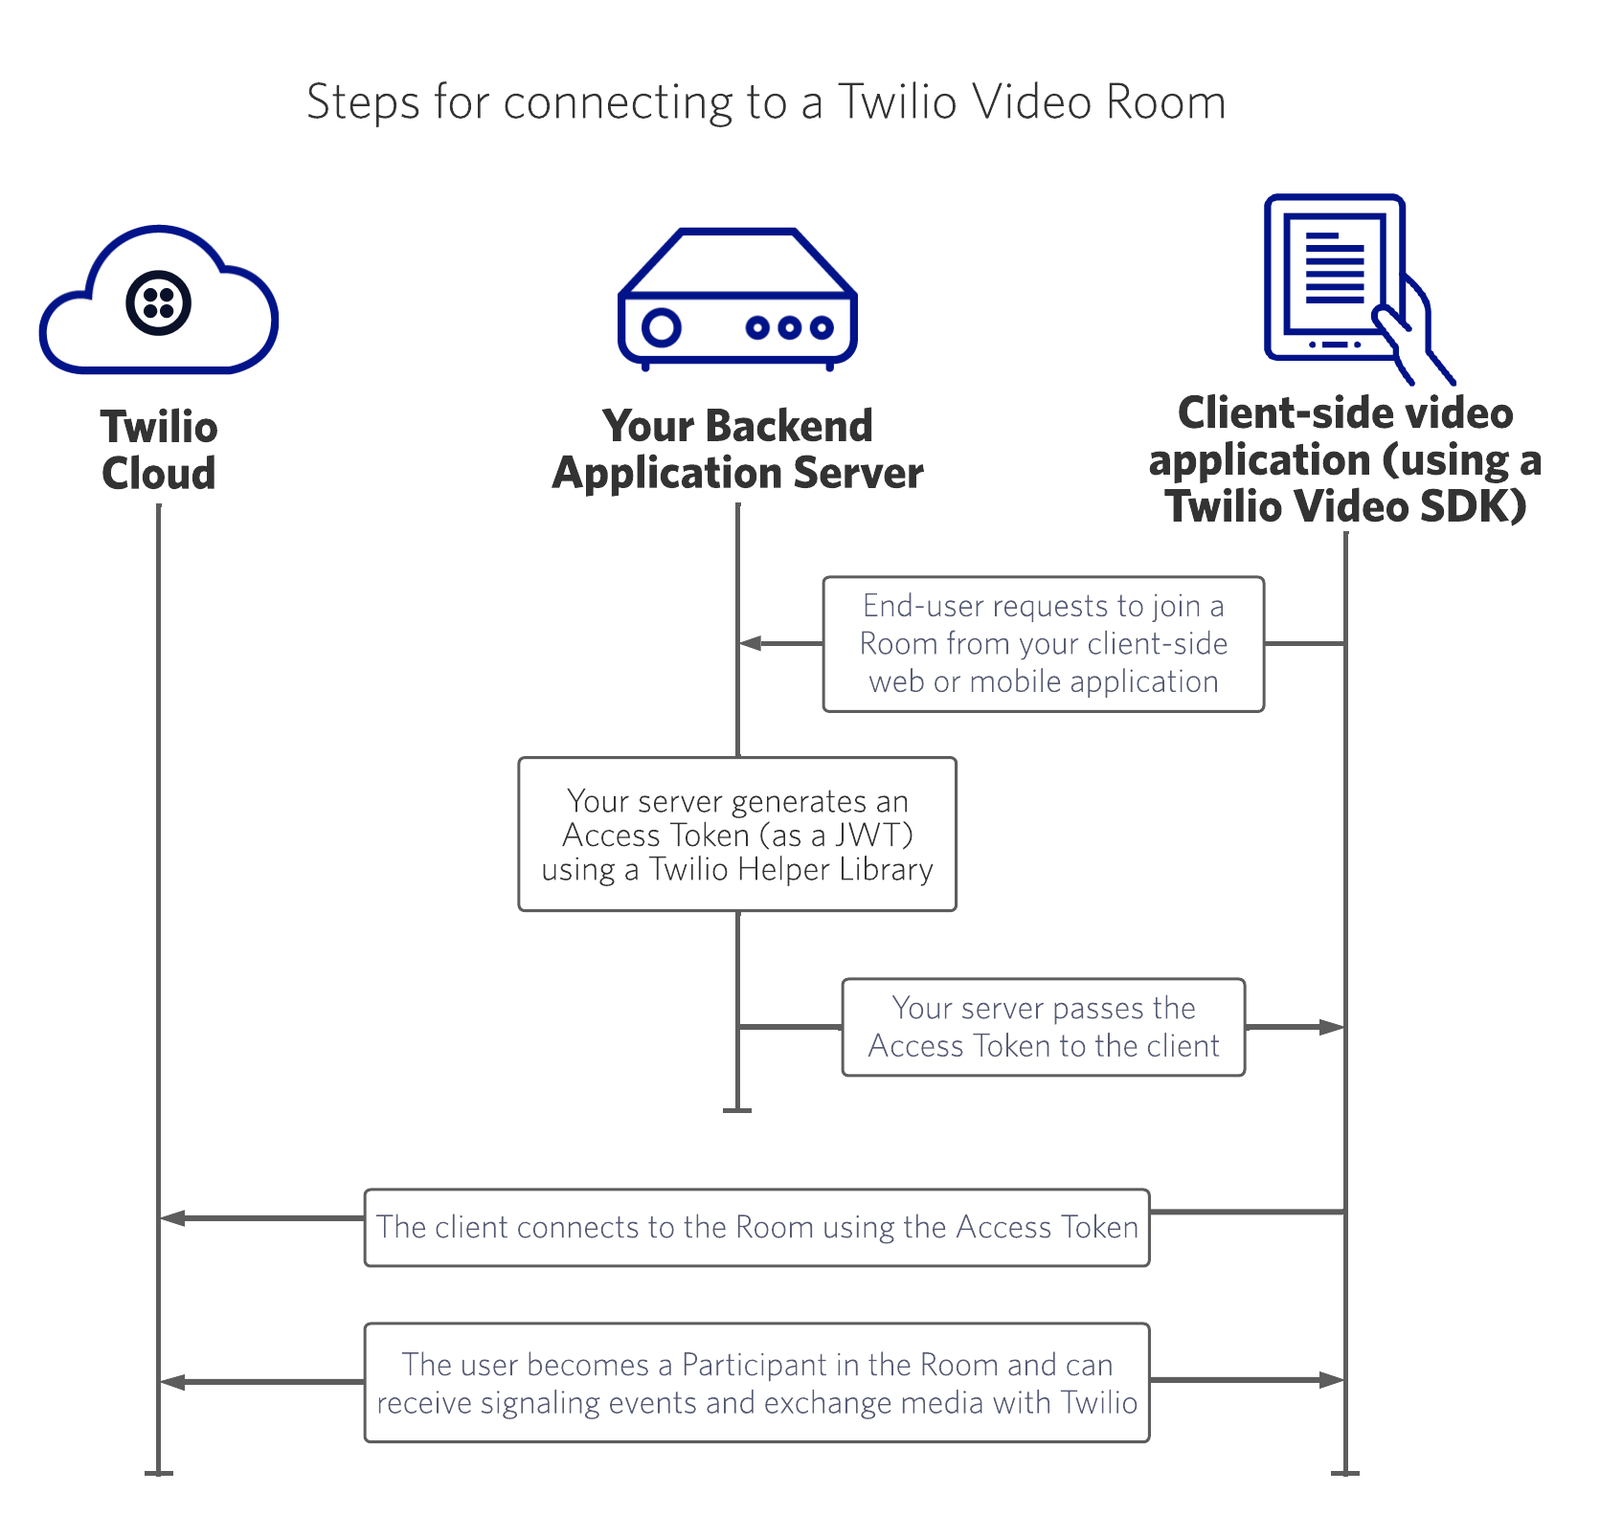 Twilio Video application workflow.